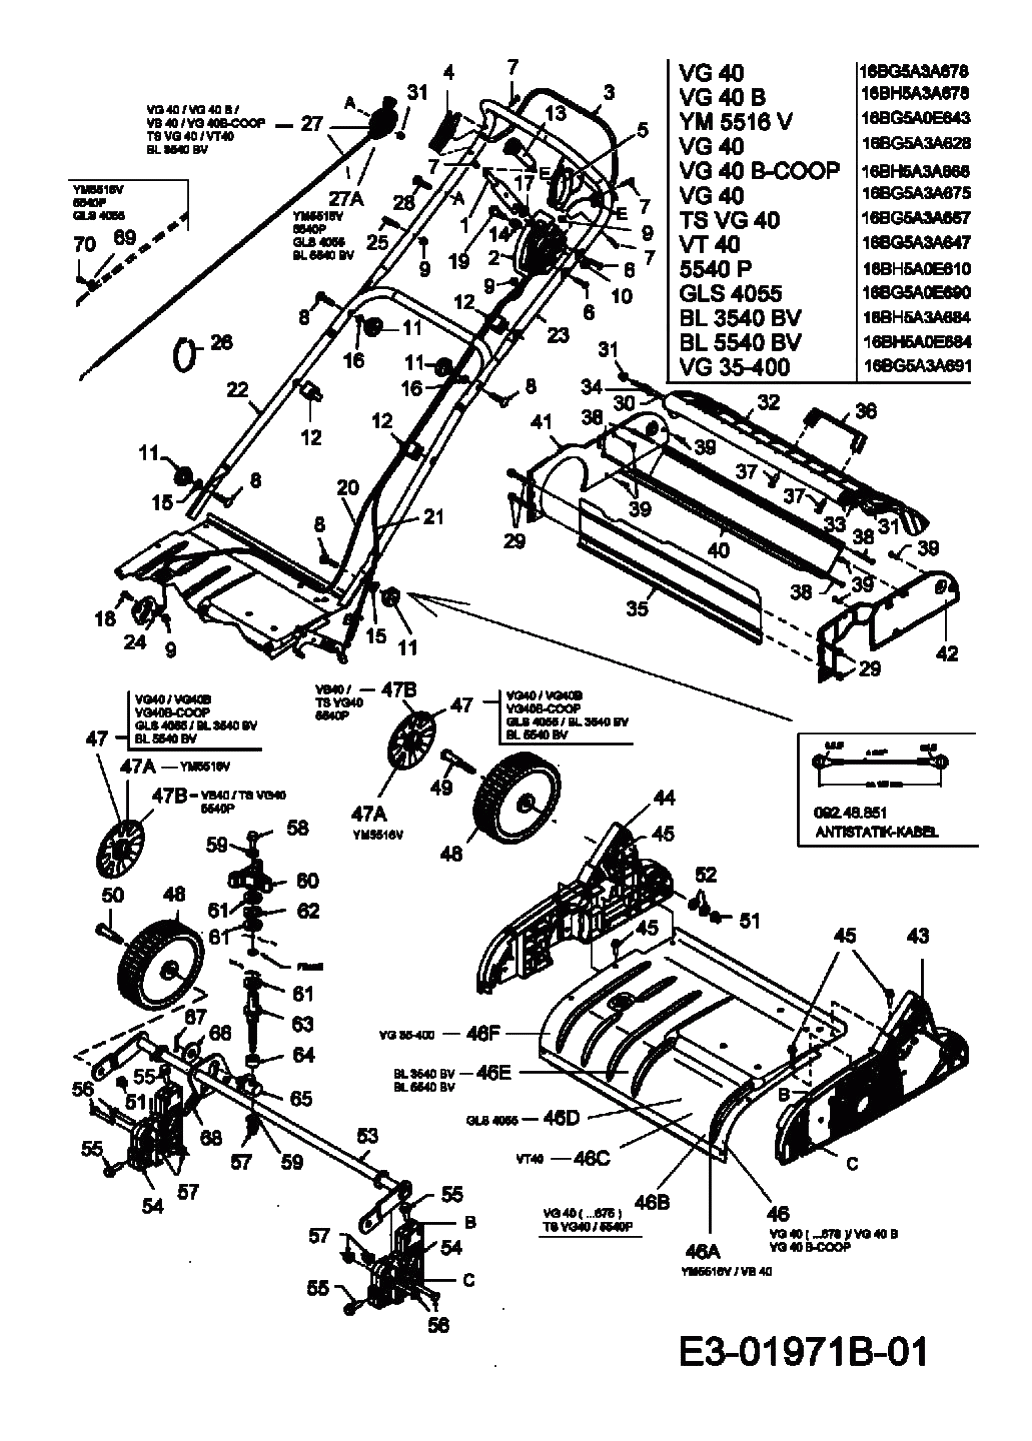 MTD Артикул 16BG5A3A678 (год выпуска 2006). Ручка, регулятор высоты, колеса